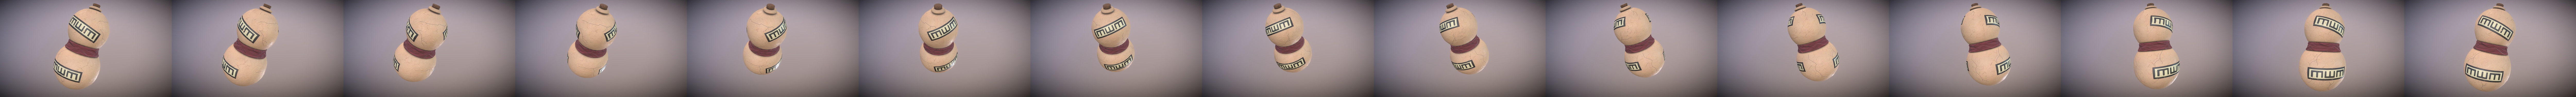 Gaara's Gourd (Naruto) - Download Free 3D model by Doverlock (@Doverlock)  [23e7388]